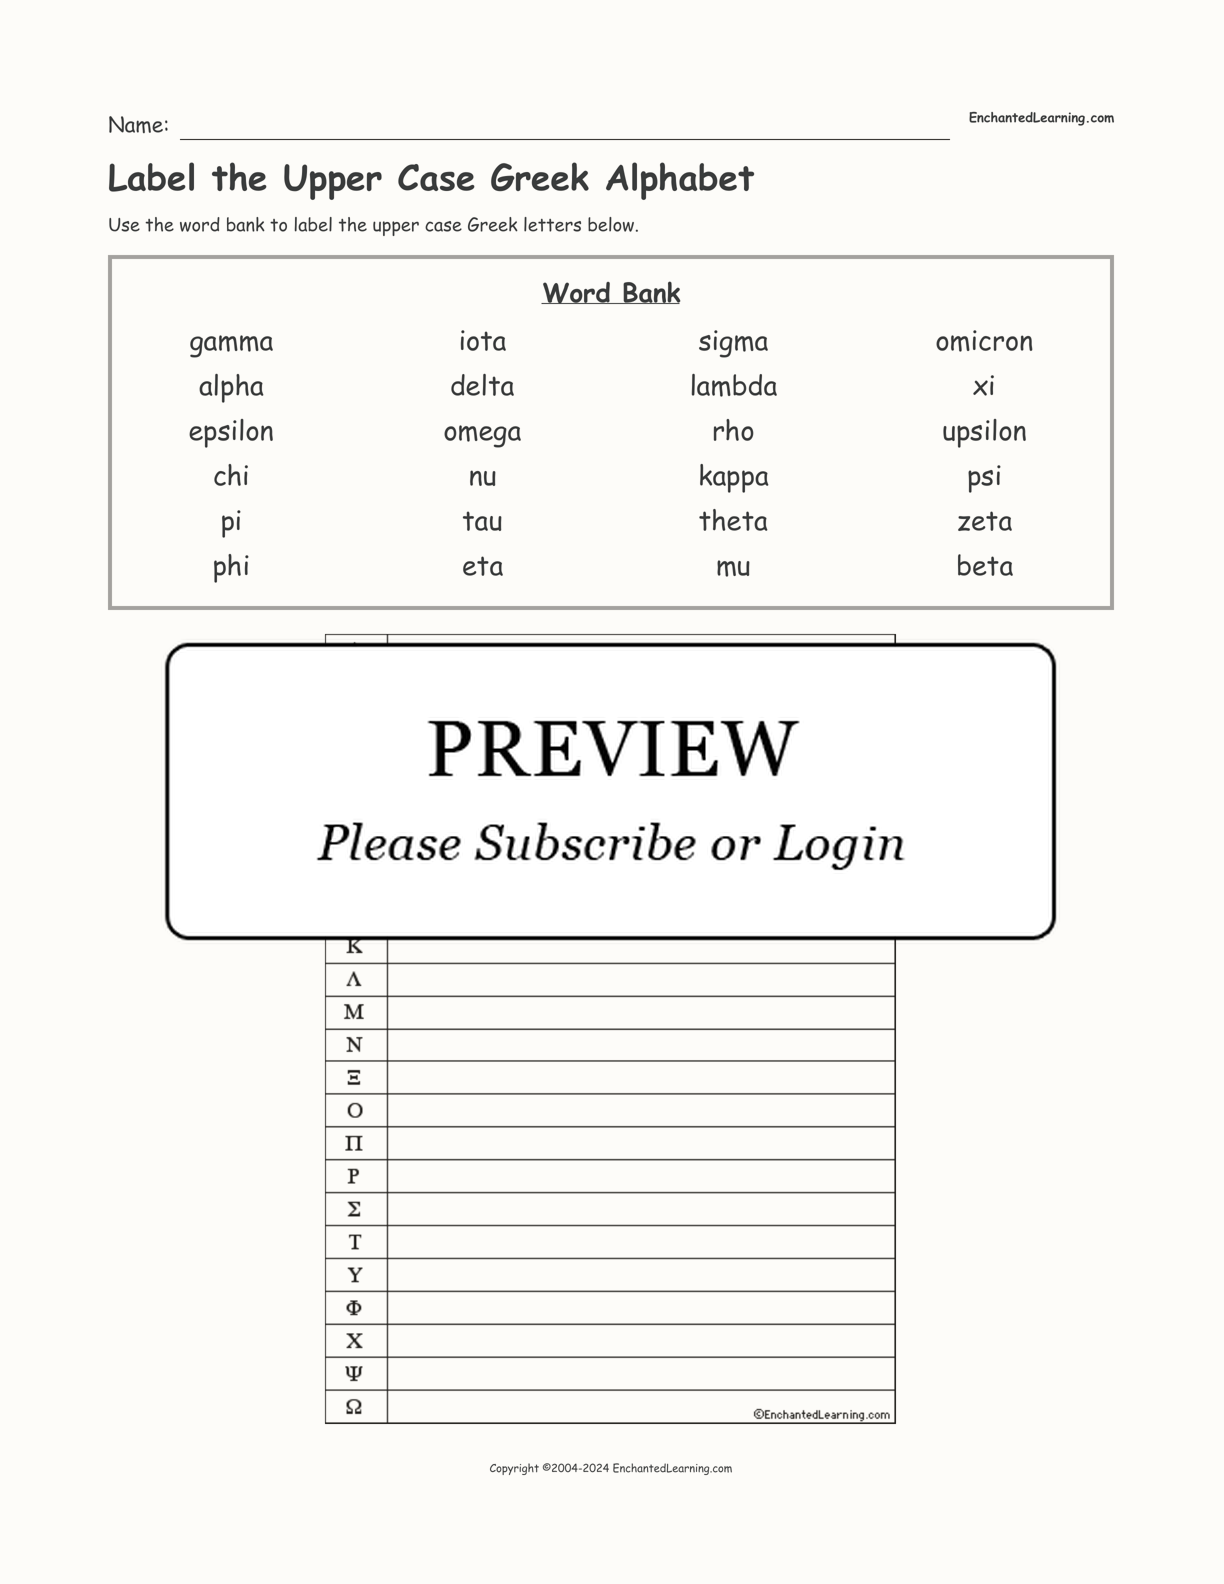 Label the Upper Case Greek Alphabet interactive worksheet page 1